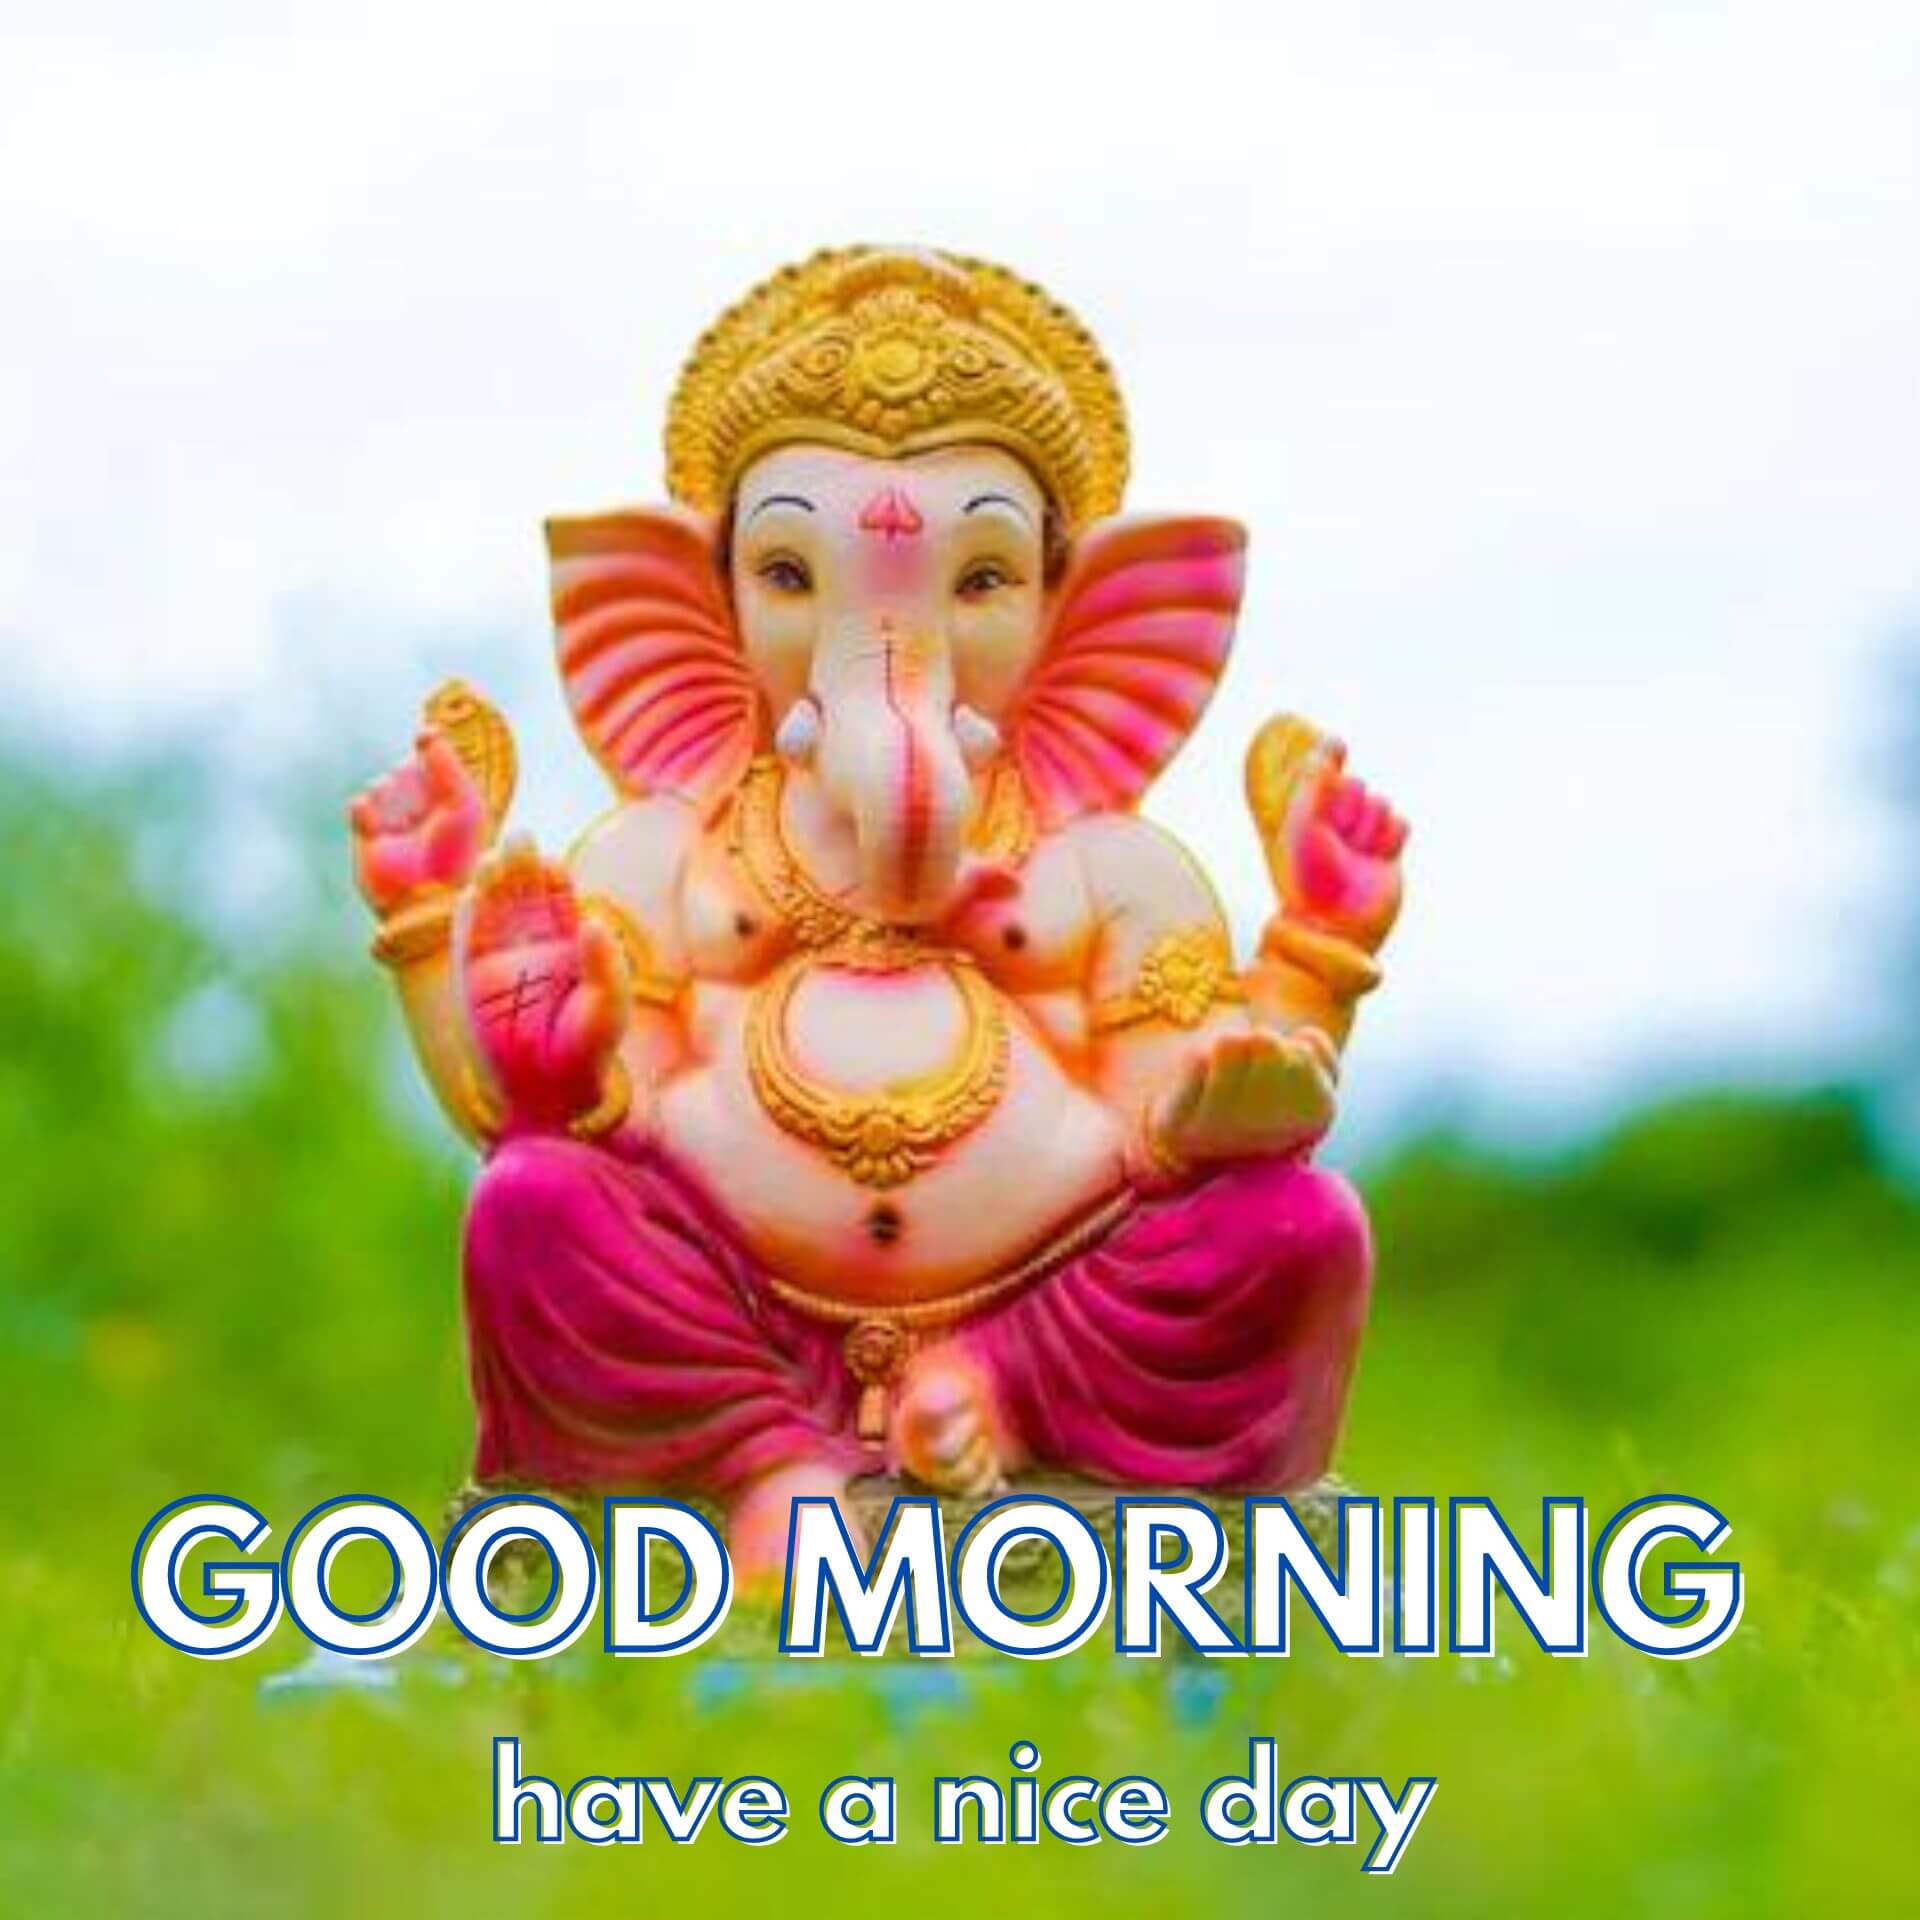 Lord God Ganesha Ji Good Morning pics Download Free Download